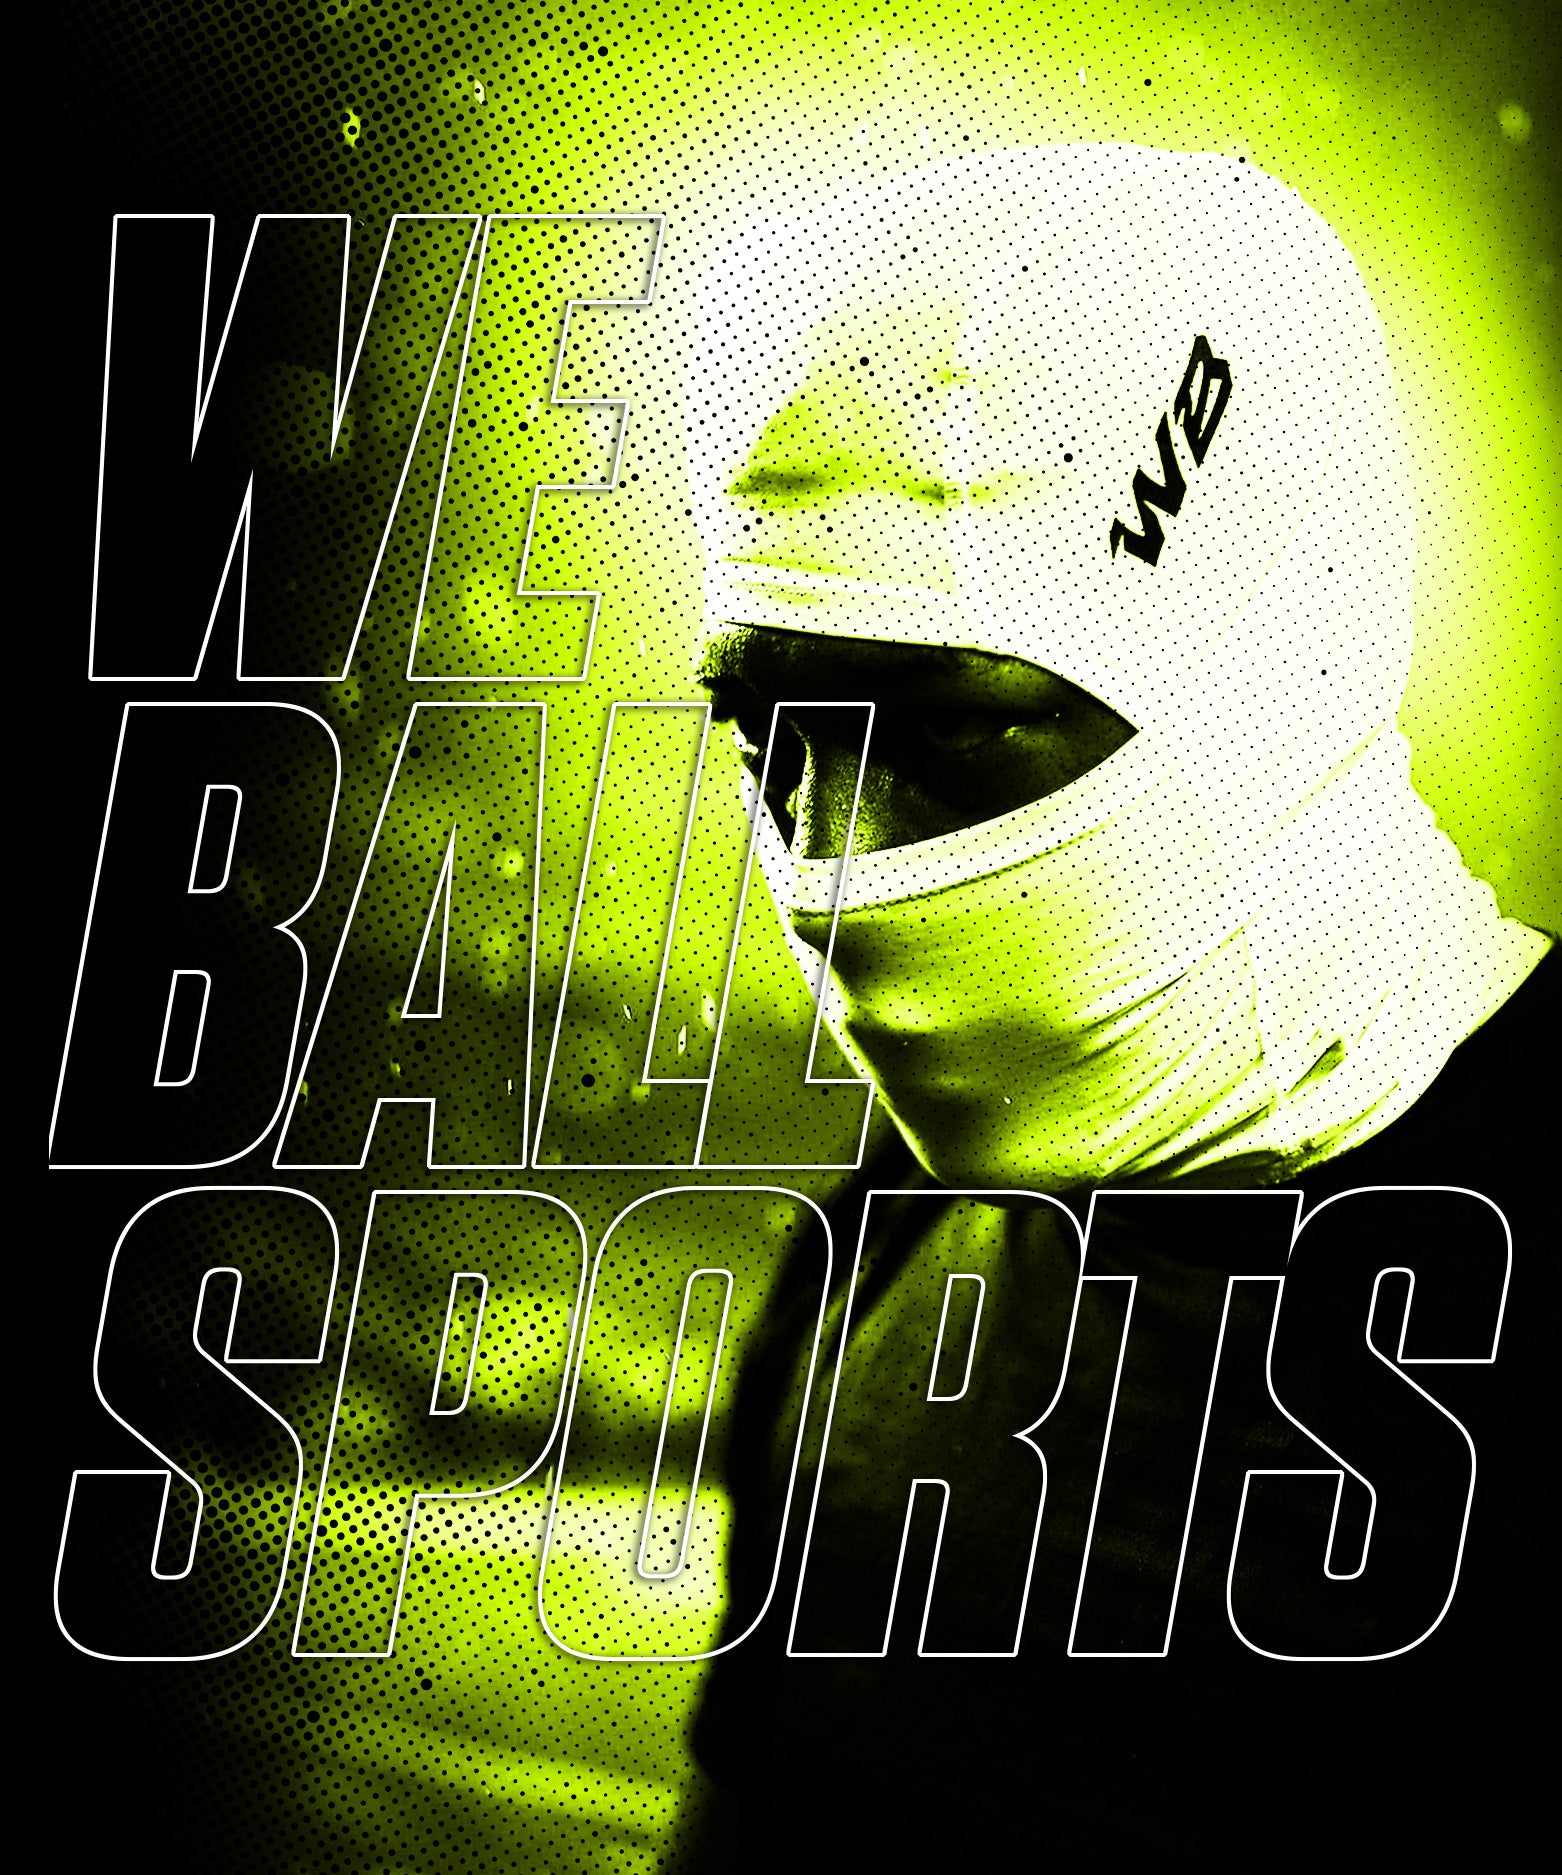 We Ball Sports